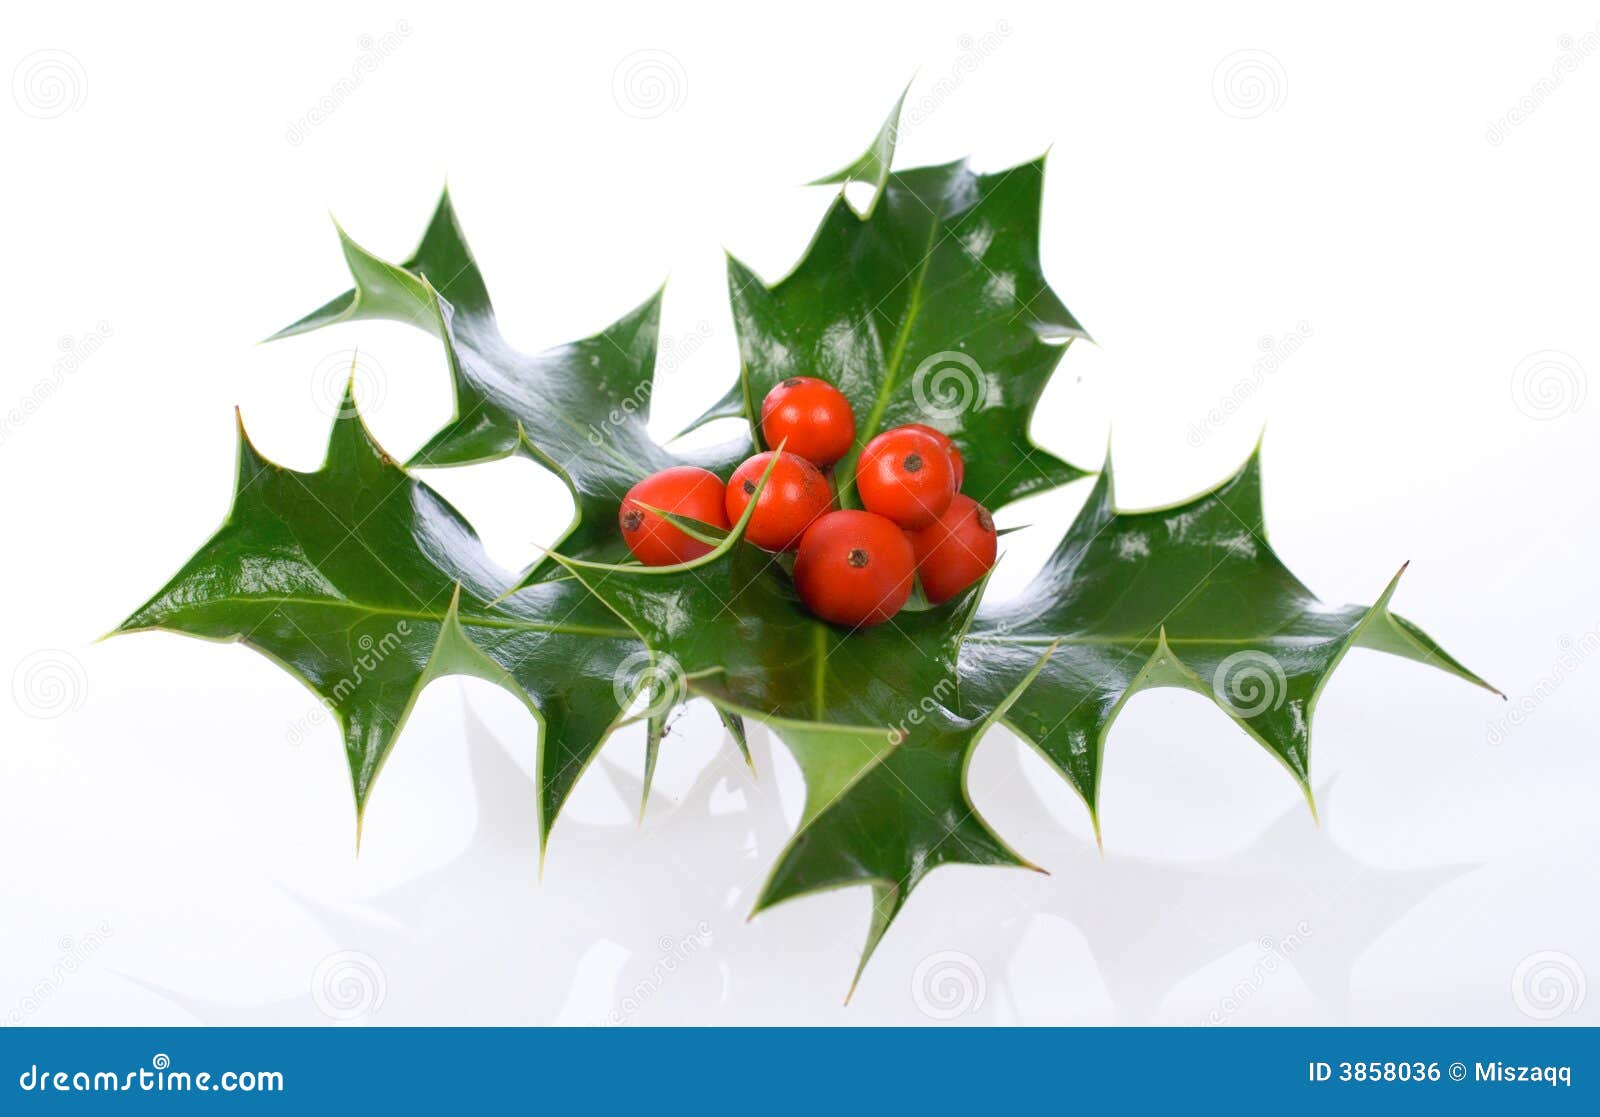 ilex,holly, christmas decoration